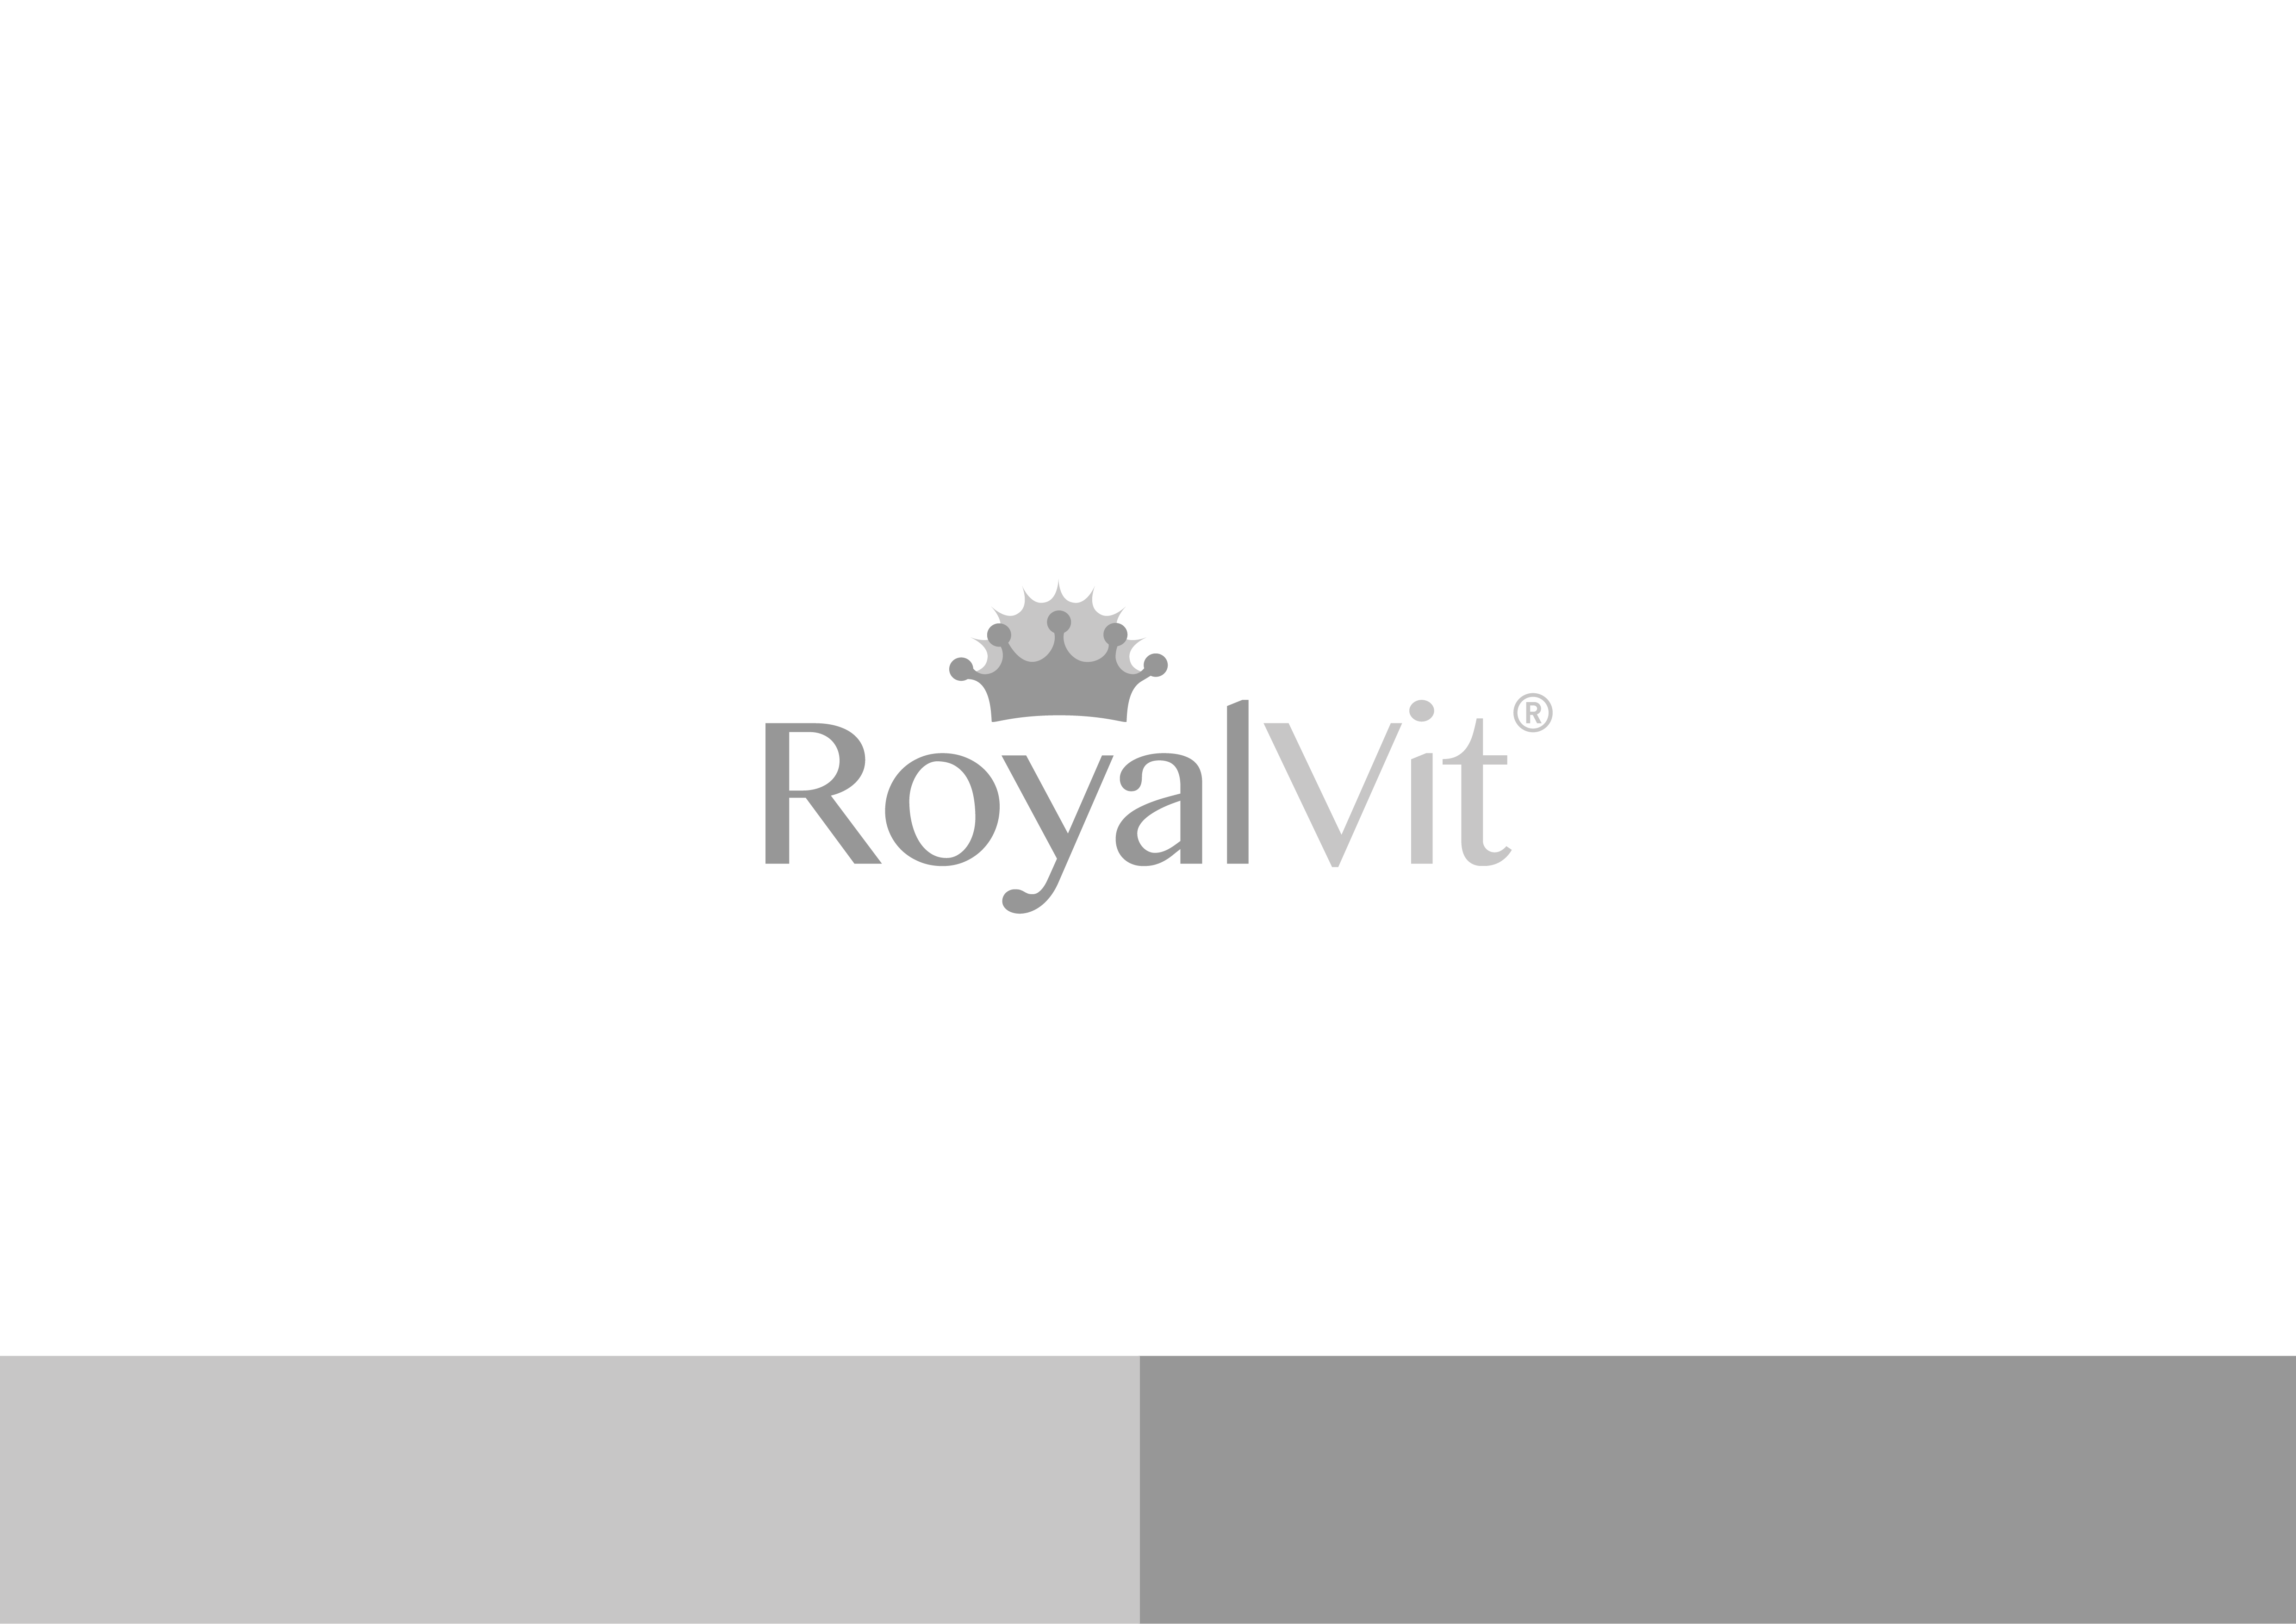 RV_royalvit-05